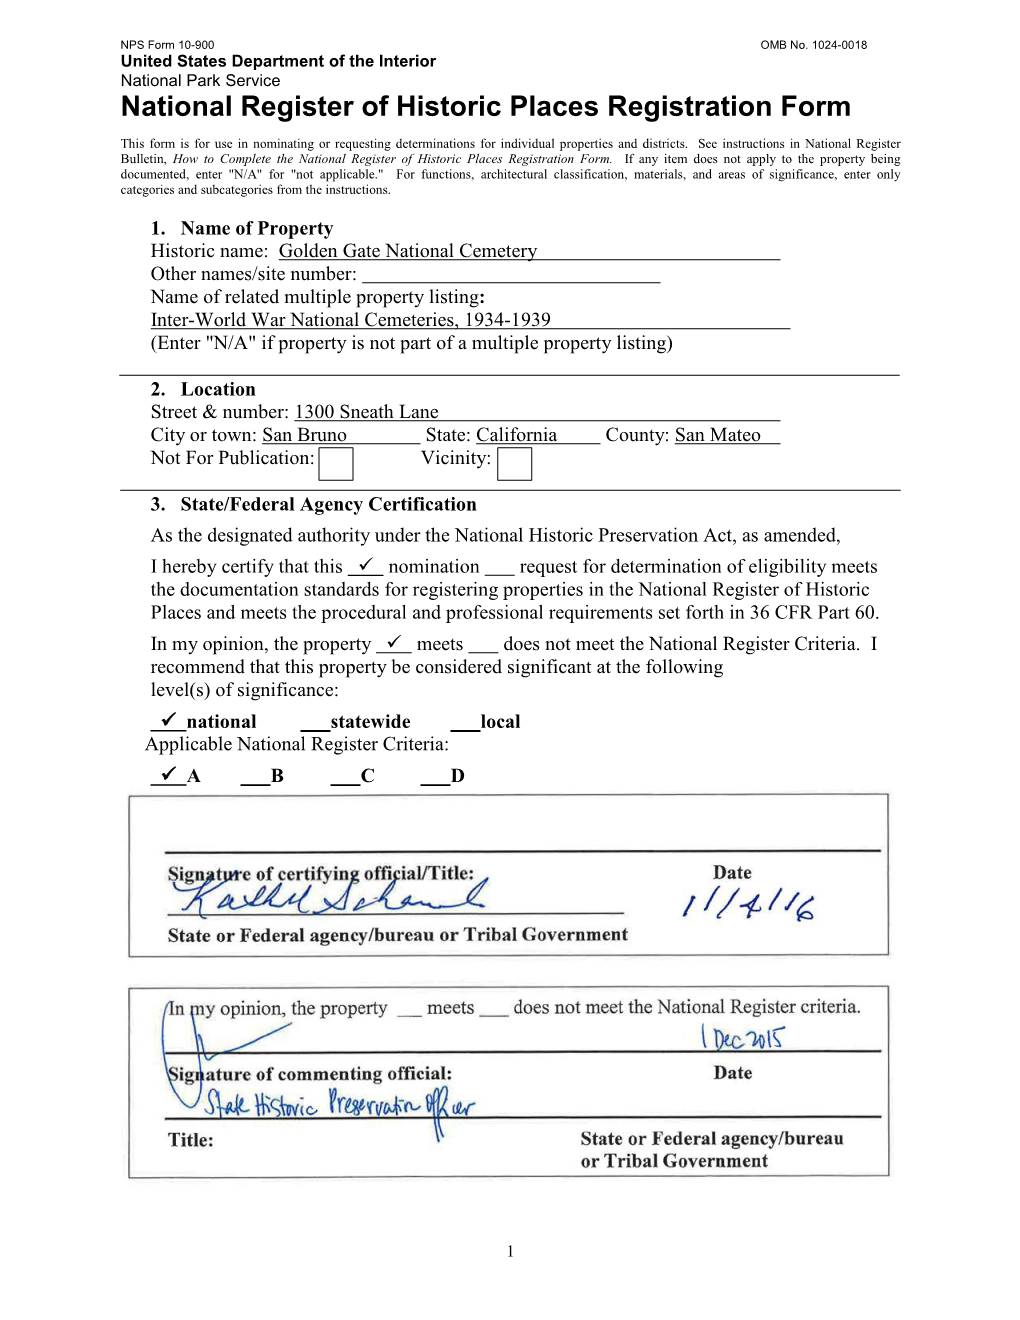 Golden Gate National Cemetery NRHP Registration Form